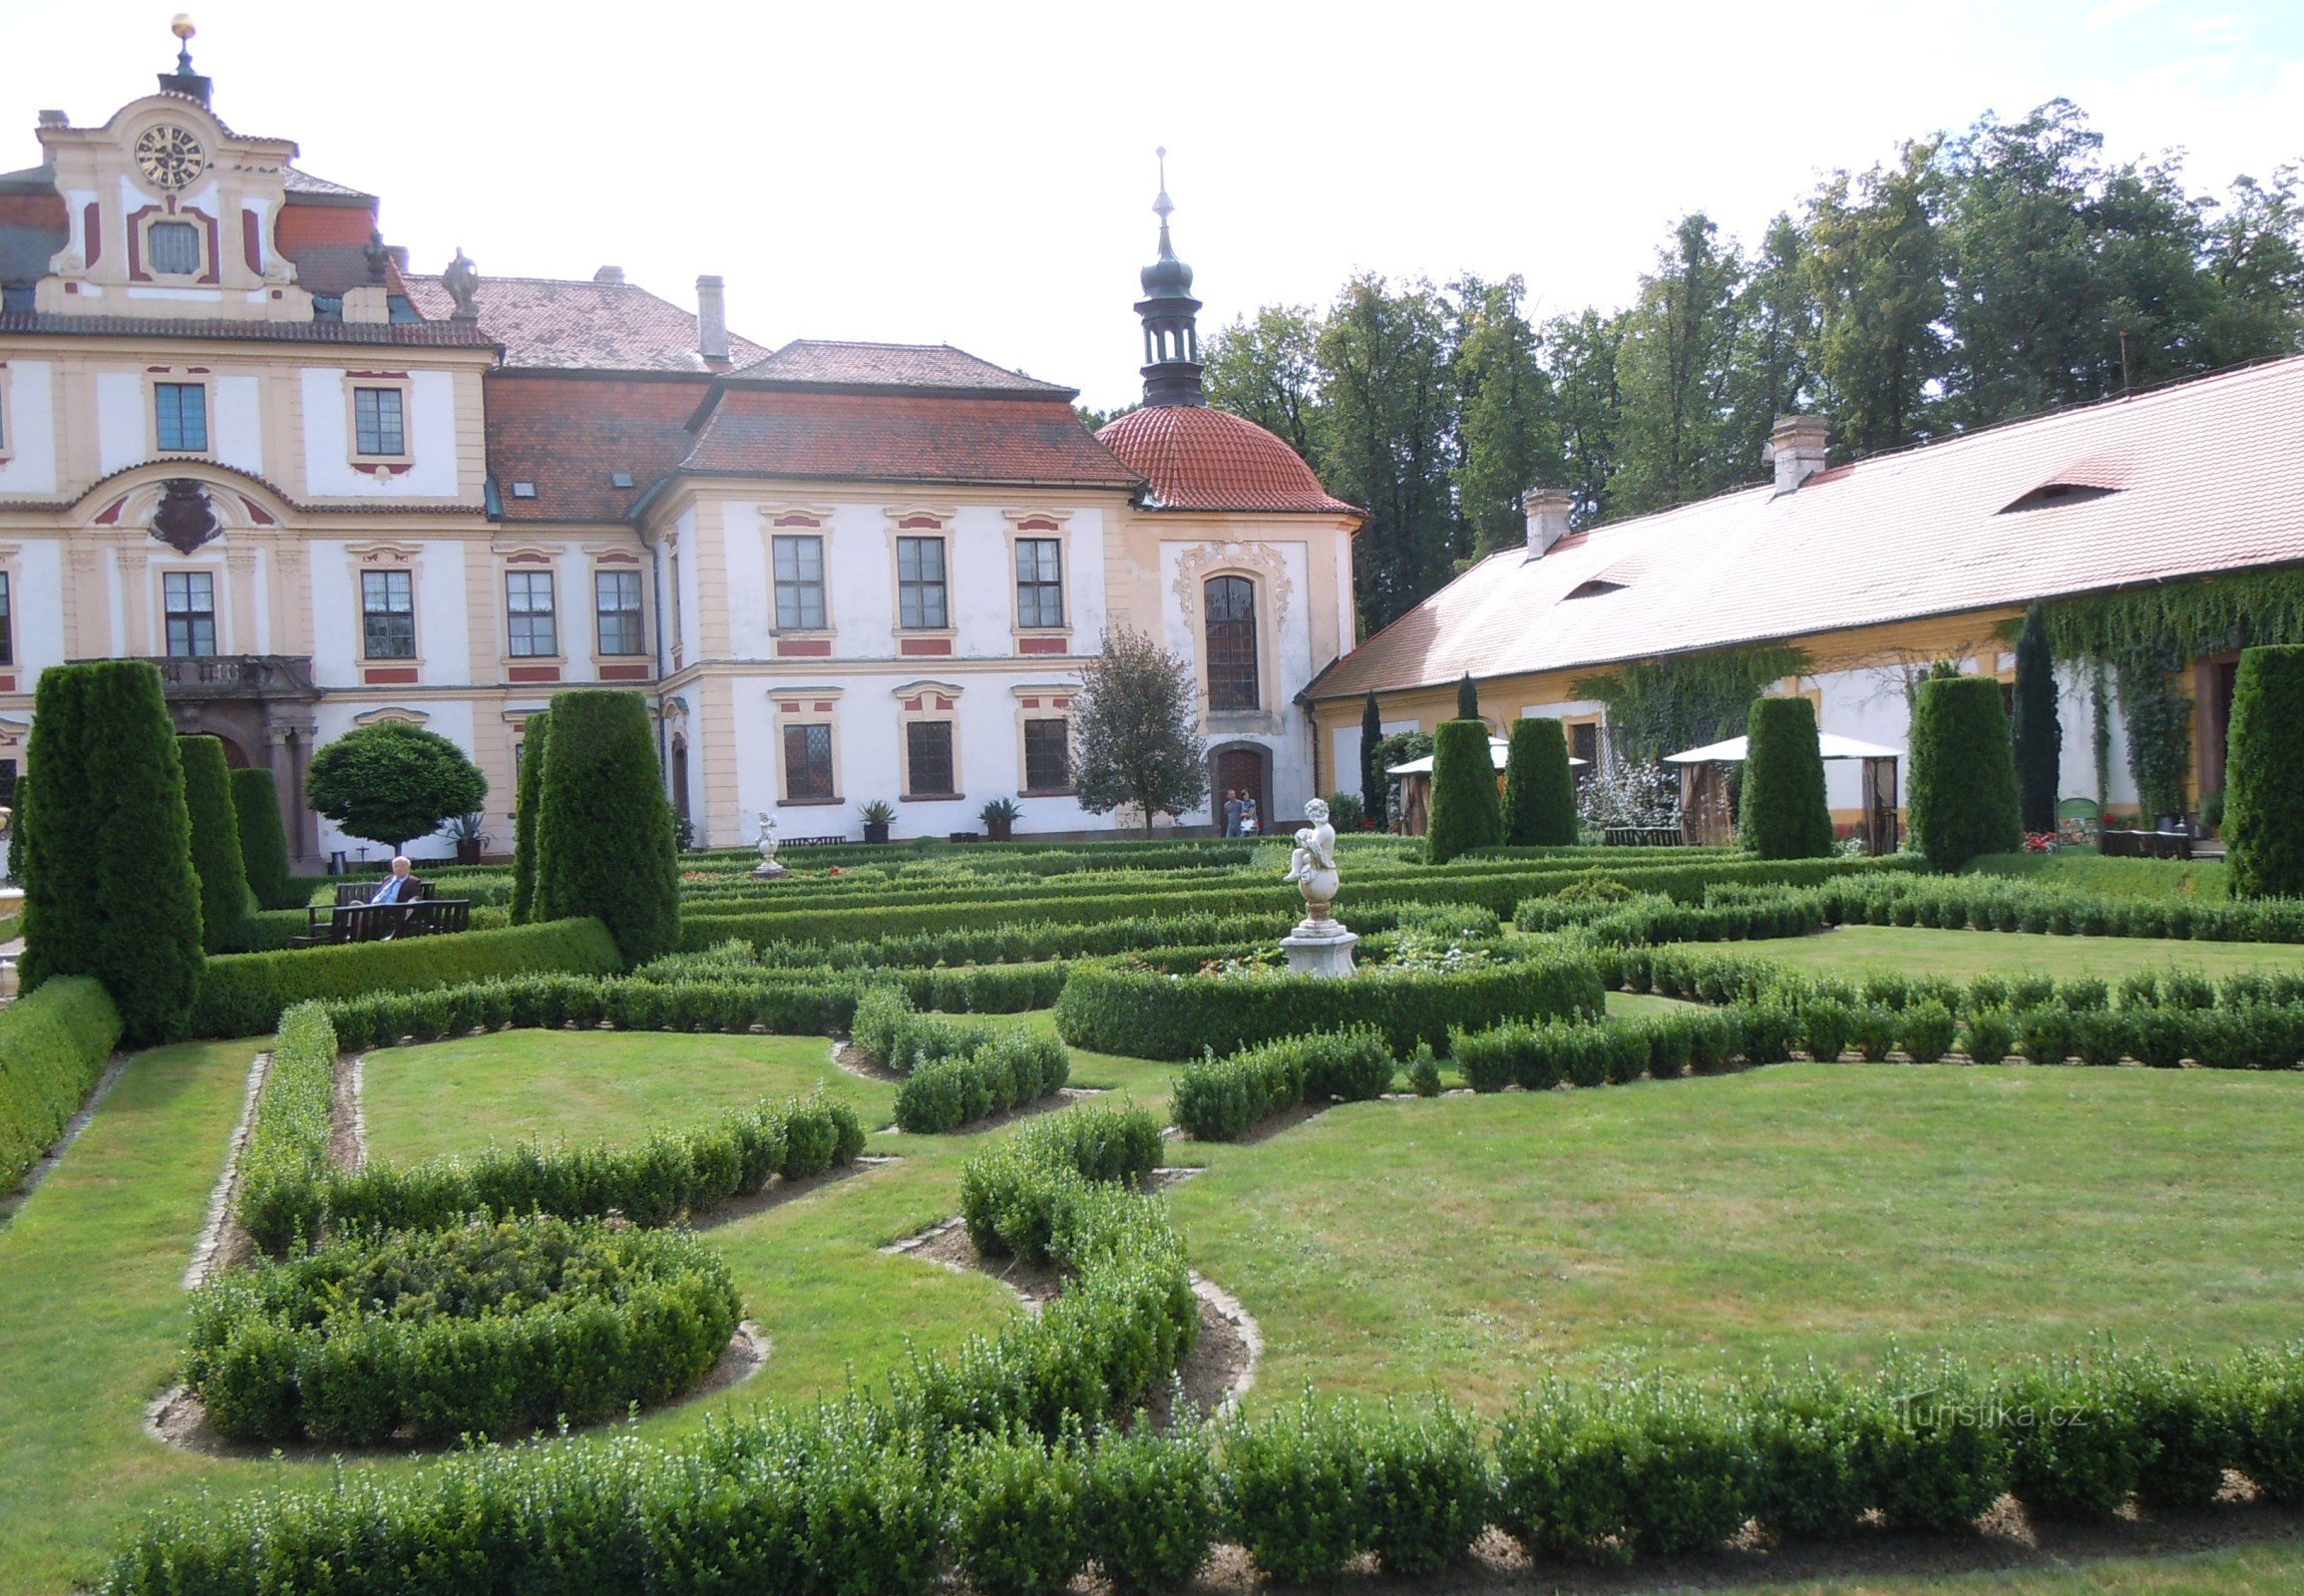 Castelo Jemniště - parte do jardim da frente